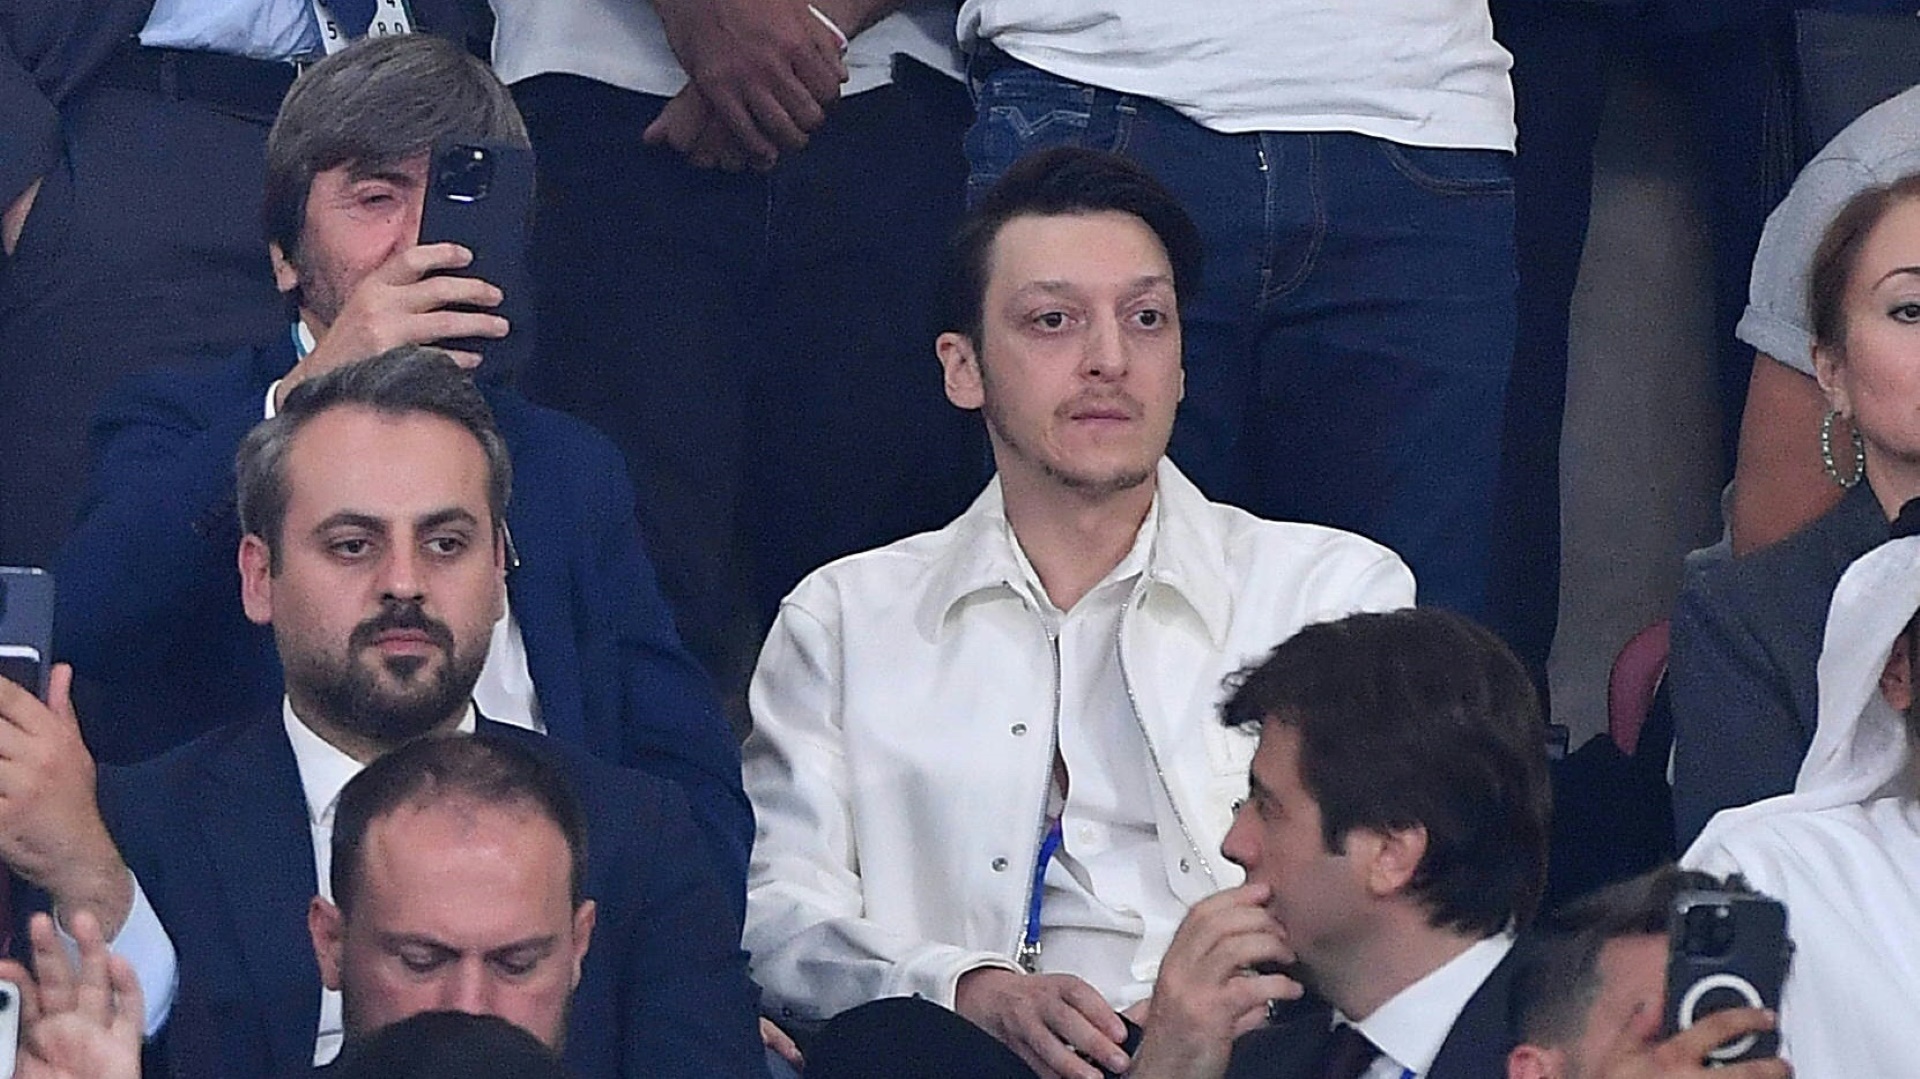 Mesut Özil fiel beim DFB in Ungnade